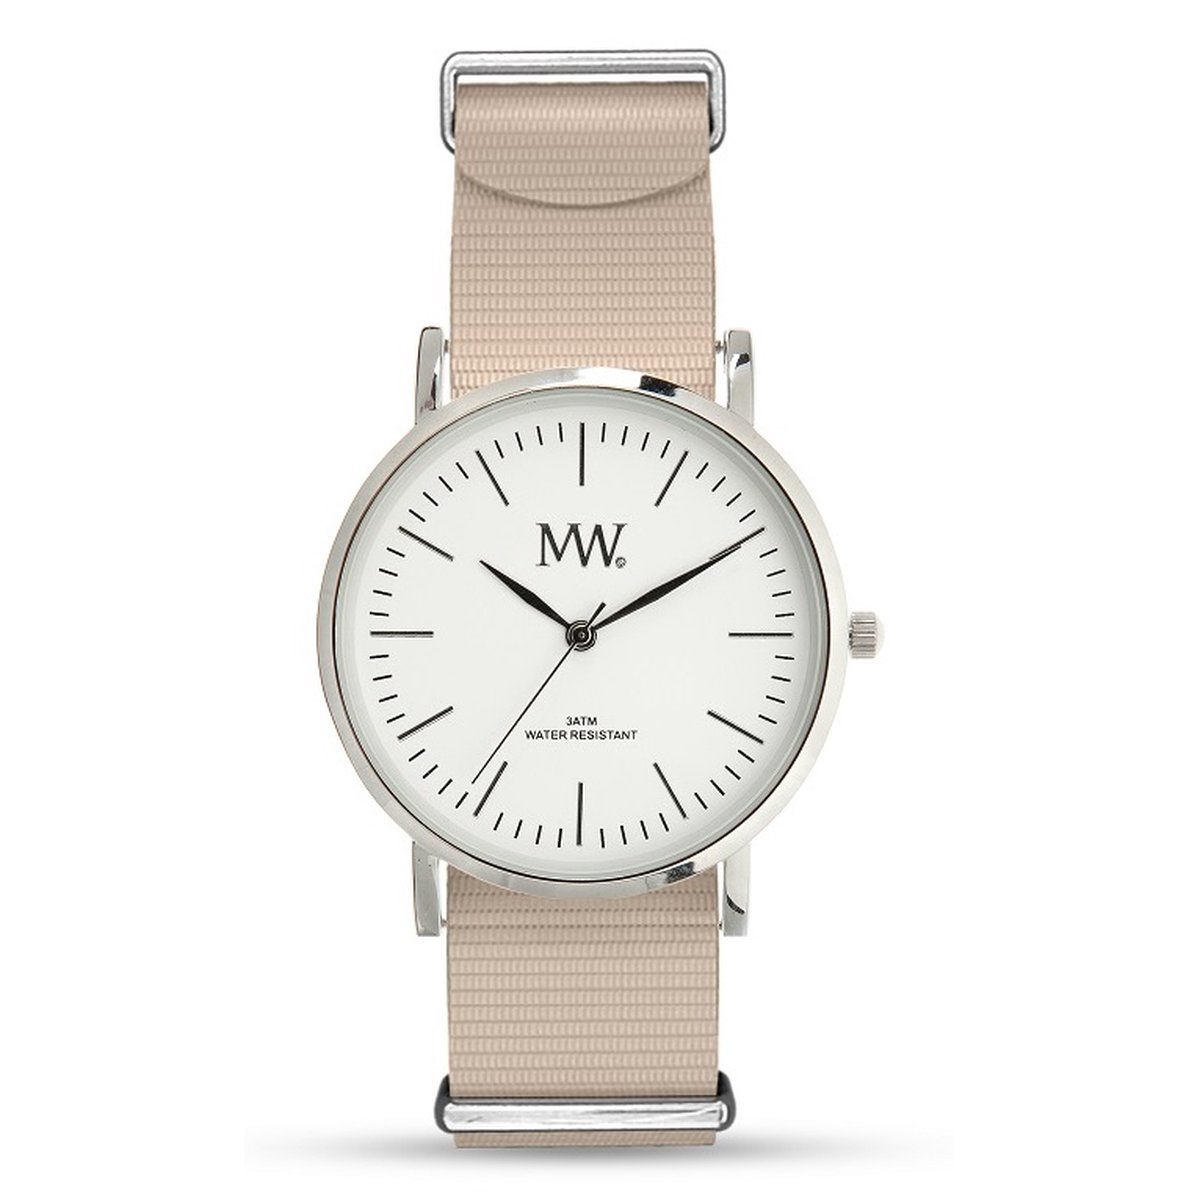 Meyewatch Nato Flat Style horloge SR incl. verwisselbare canvas band in kleur beige